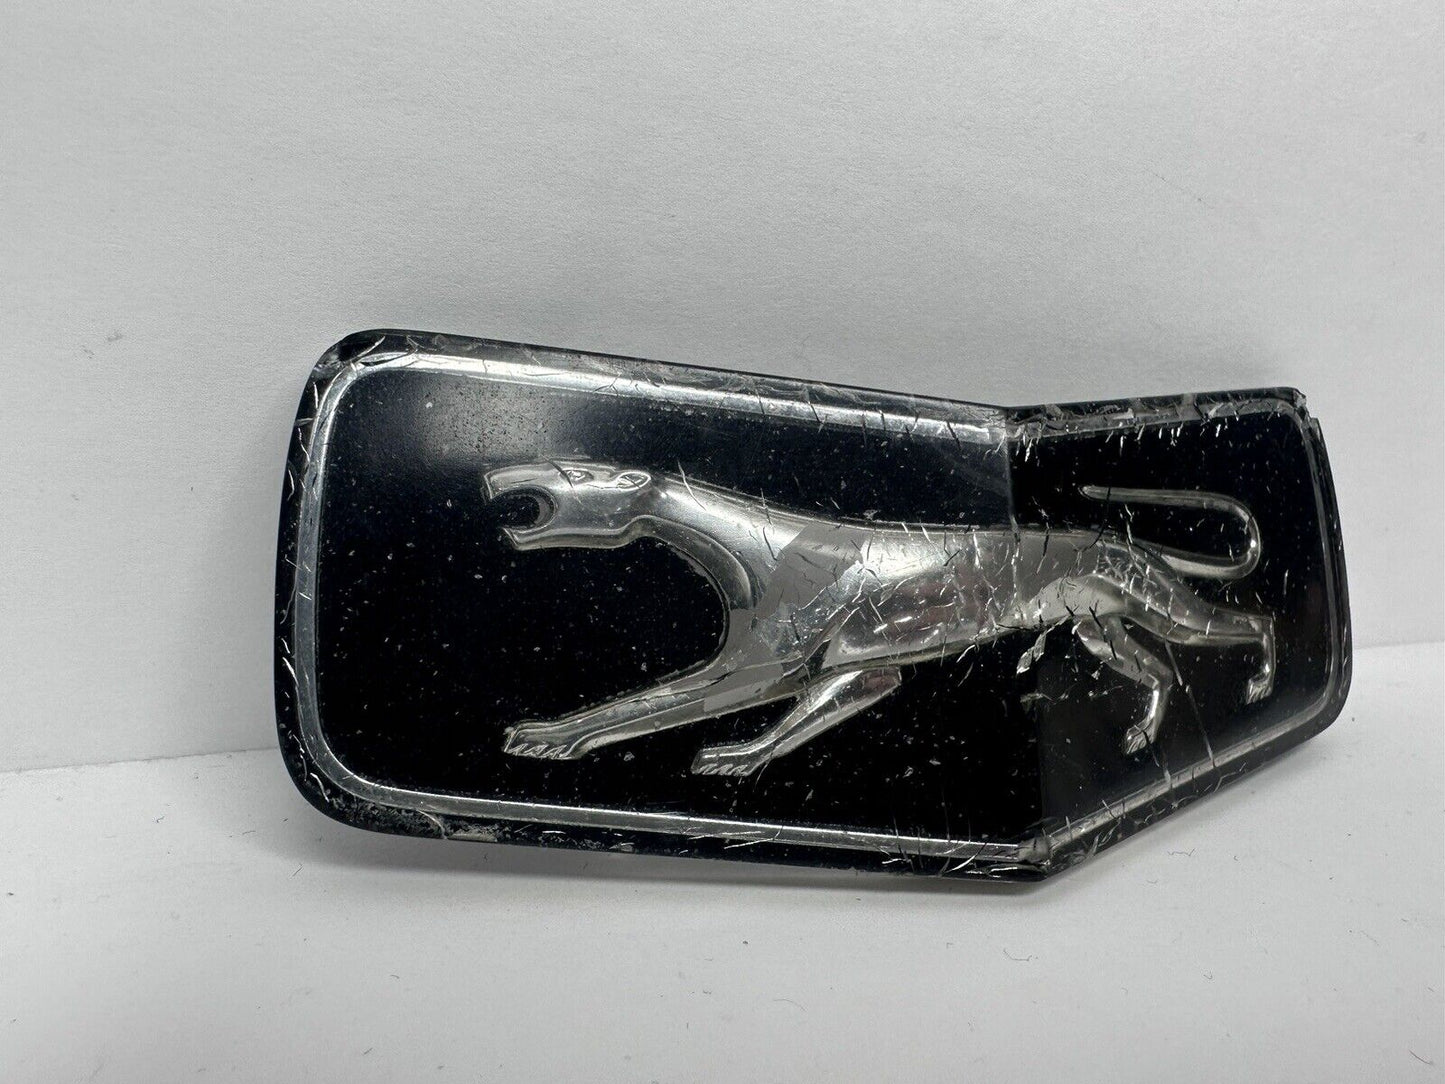 Authentic 1970s Mercury Cougar Hood Emblem - Rare Vintage Walking Cat Badge for Classic Car Restoration - TreasuTiques